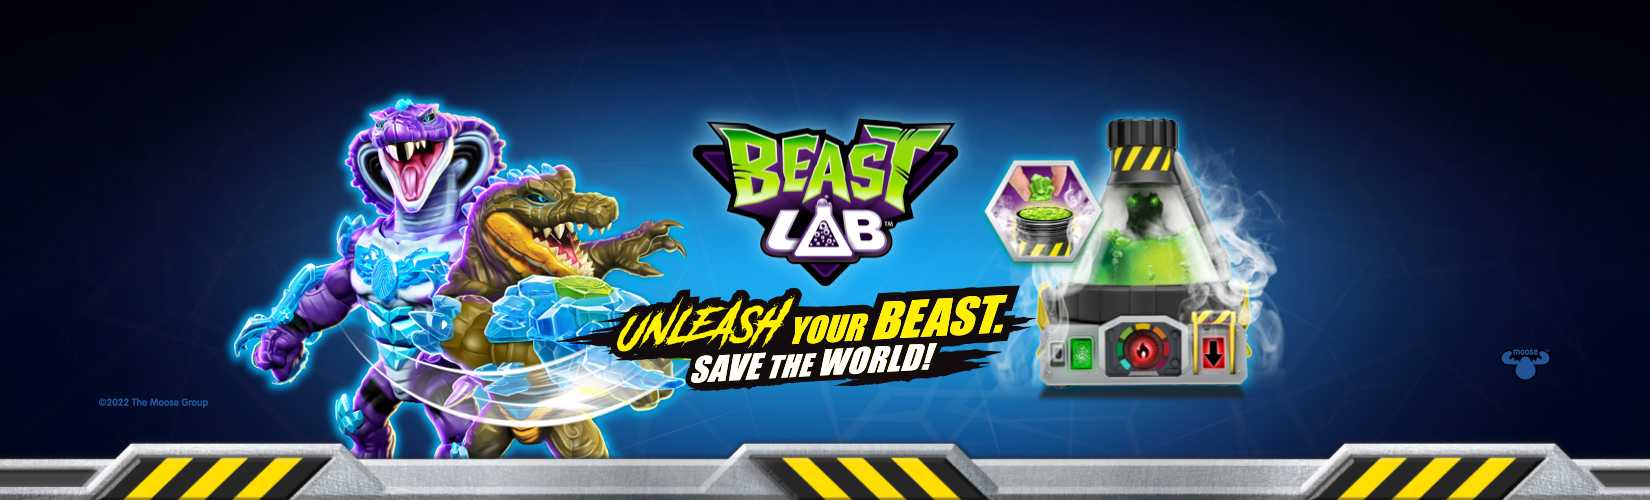 Beast Lab. Unleash your beast. Save the world!